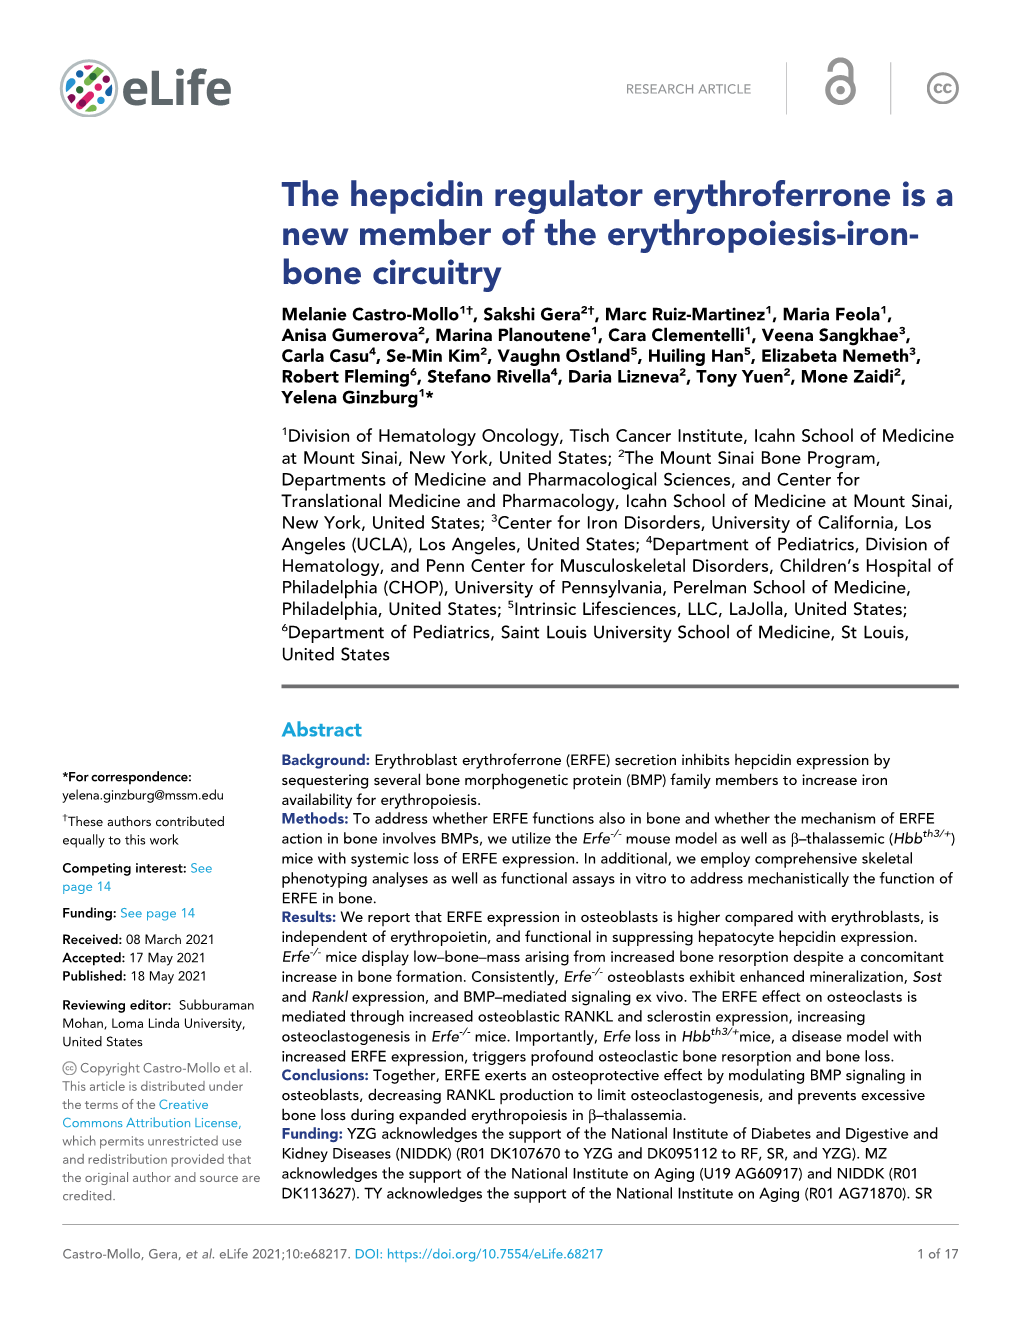 The Hepcidin Regulator Erythroferrone Is a New Member of the Erythropoiesis-Iron